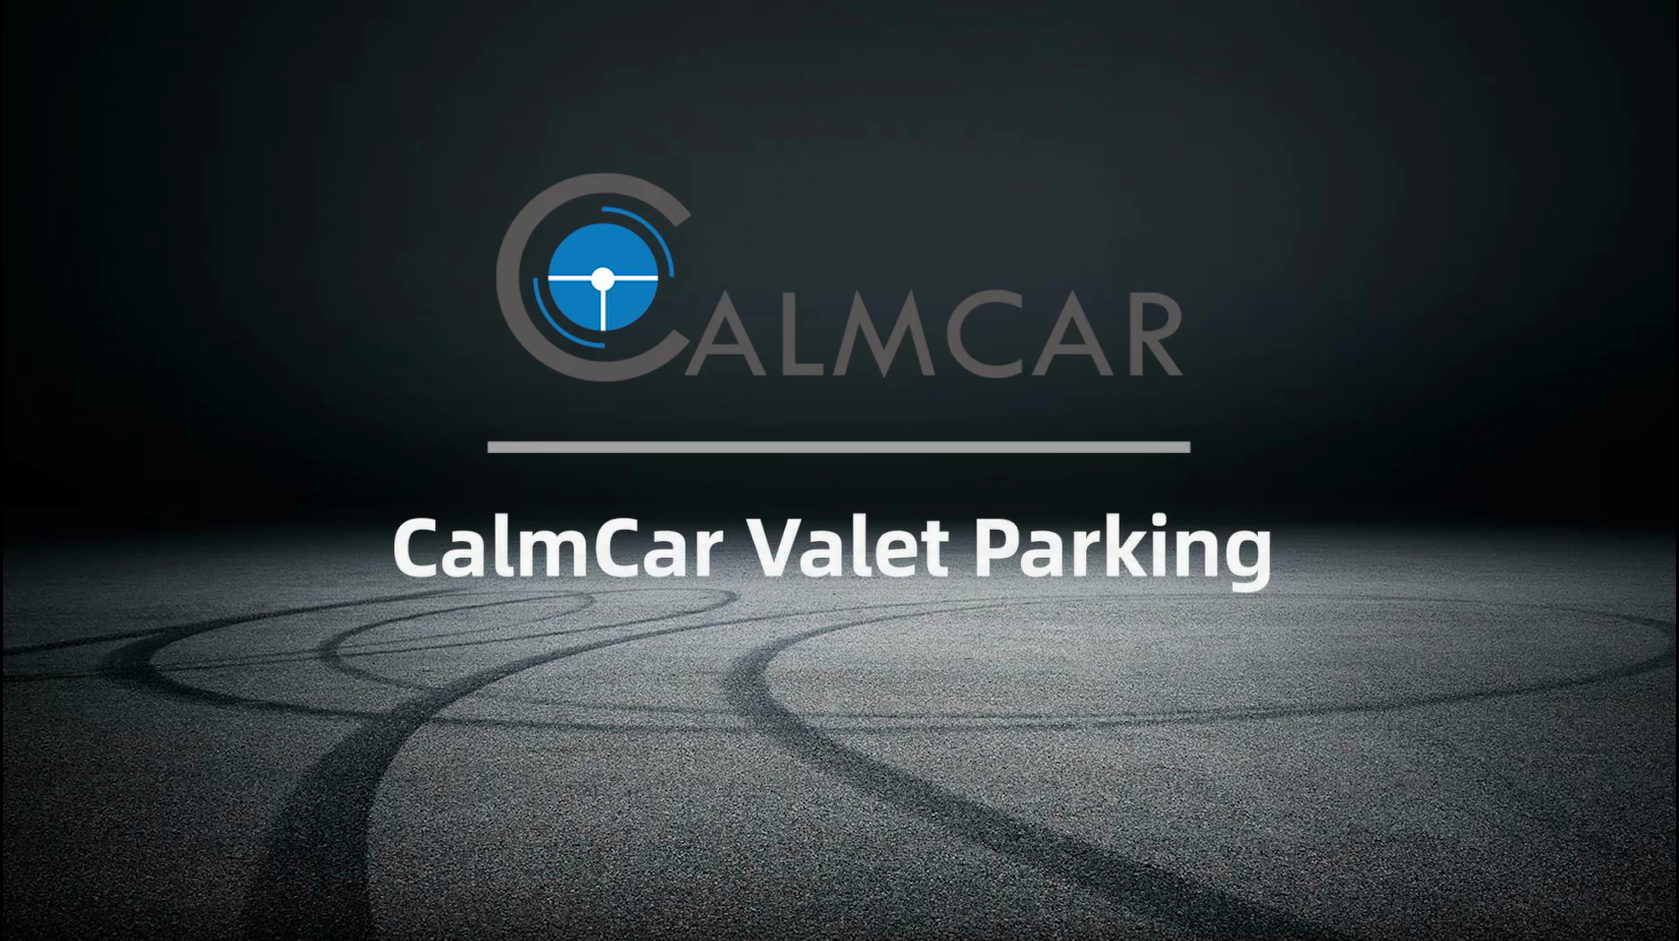 CalmCar Valet Parking